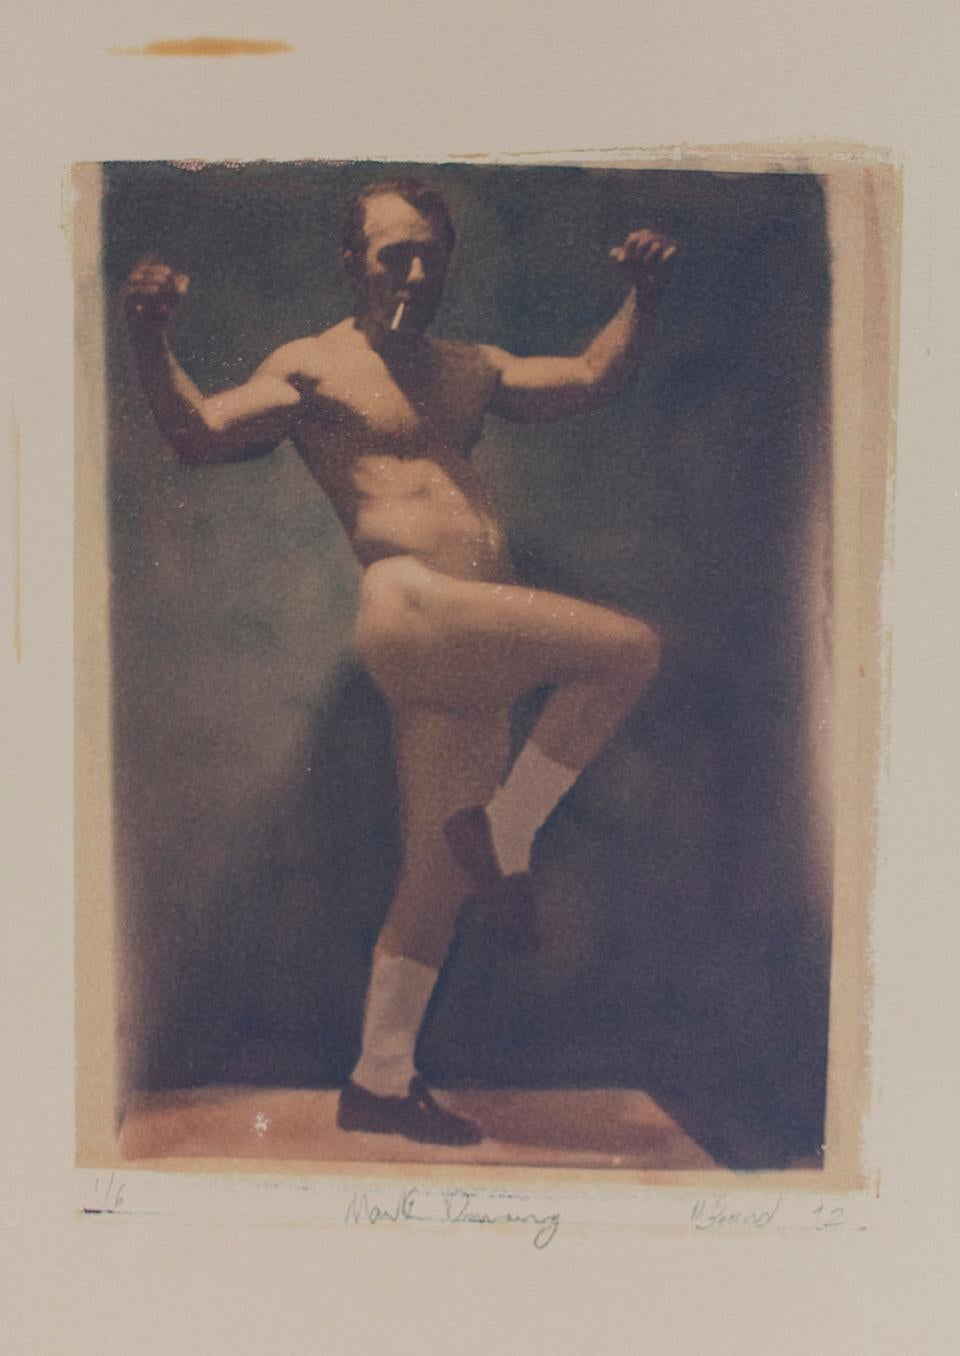 Mark Dancing (Polaroid Transfer of a Nude Man Smoking in Socks on Rives BFK)